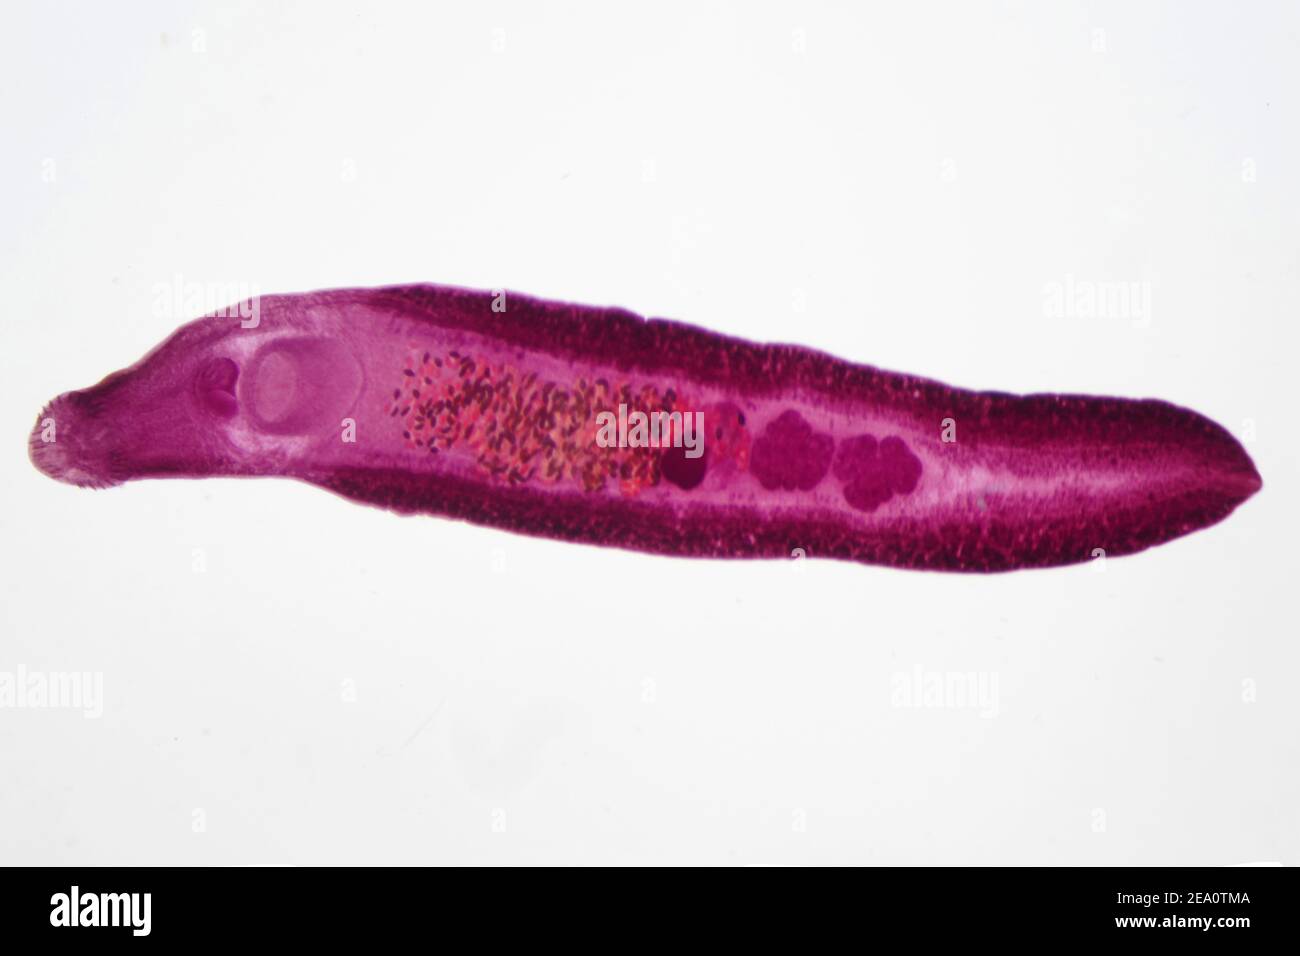 Liver fluke, light micrograph Stock Photo